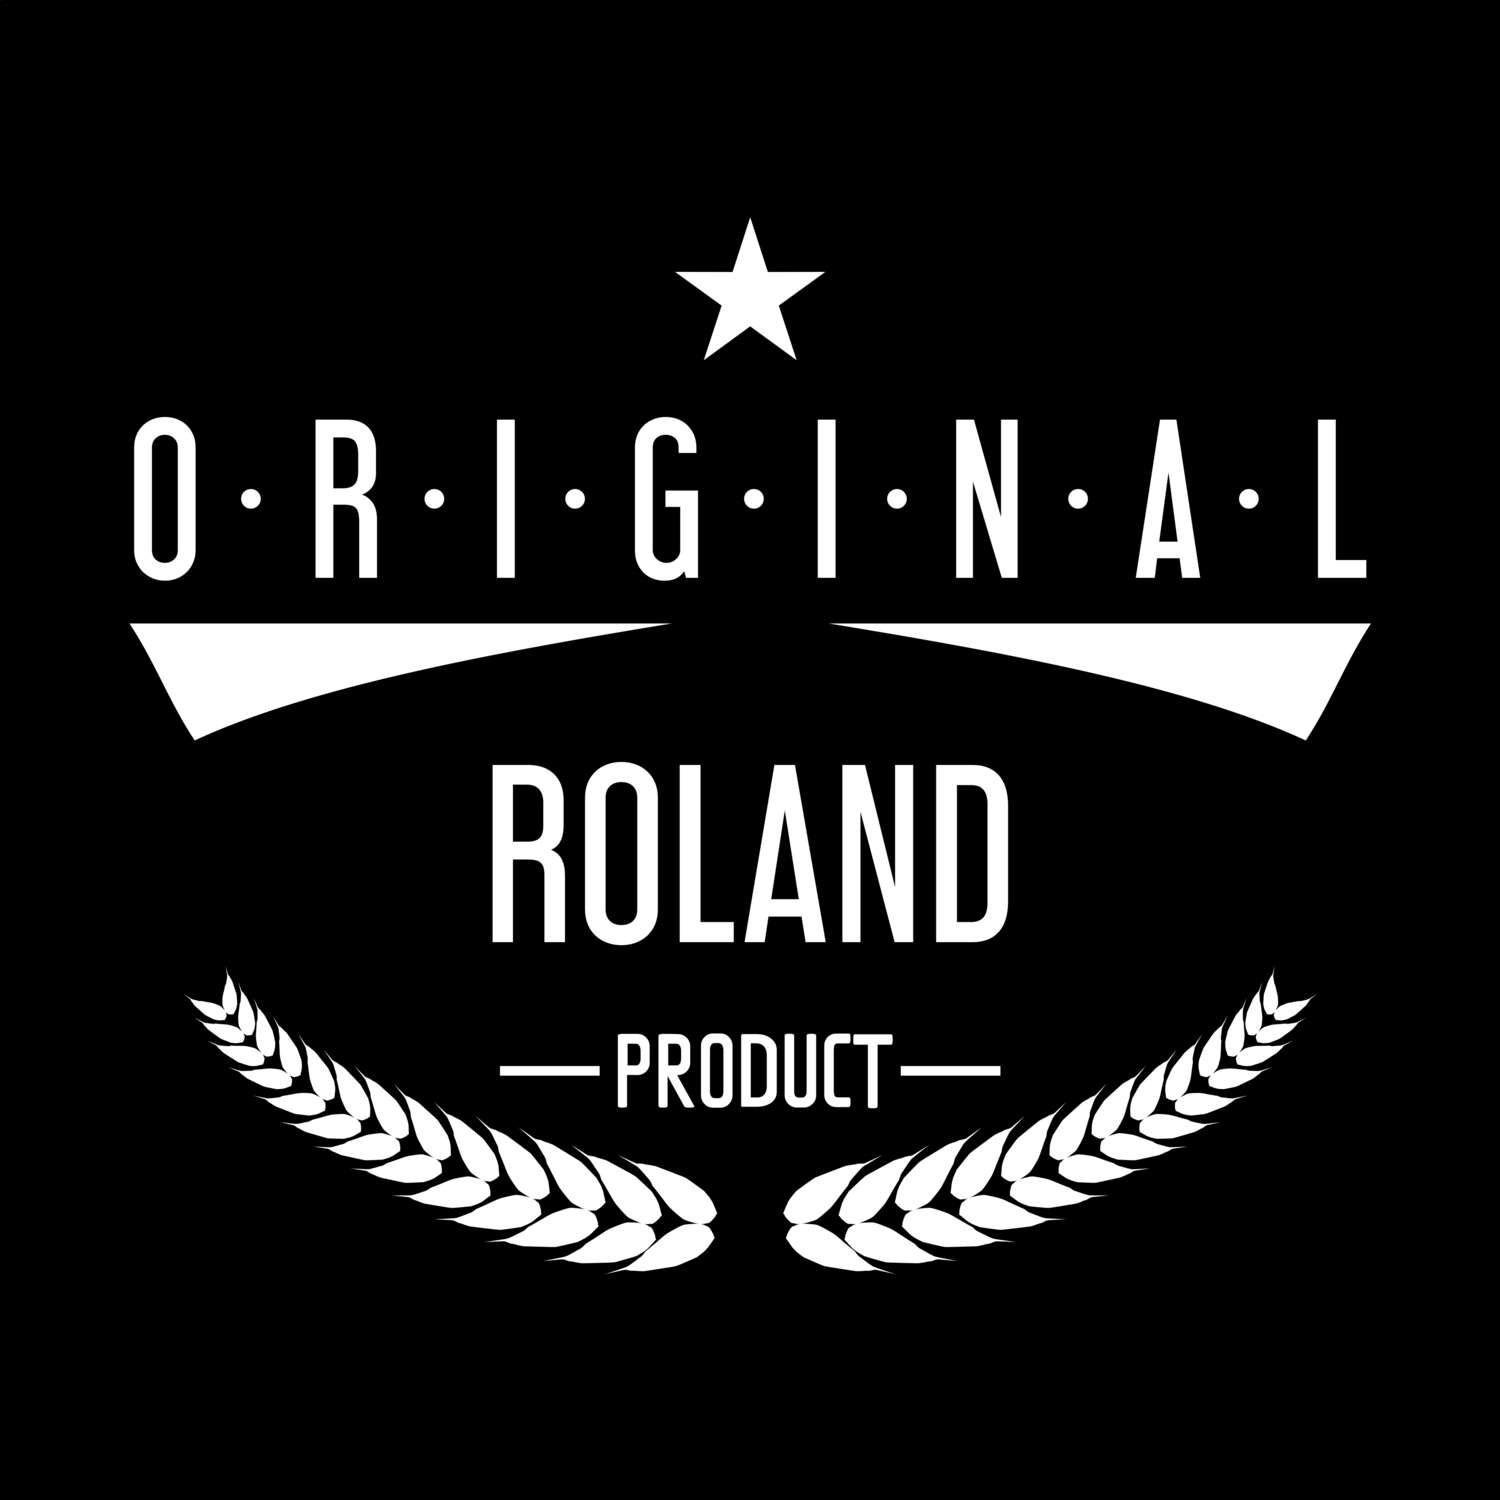 Roland T-Shirt »Original Product«